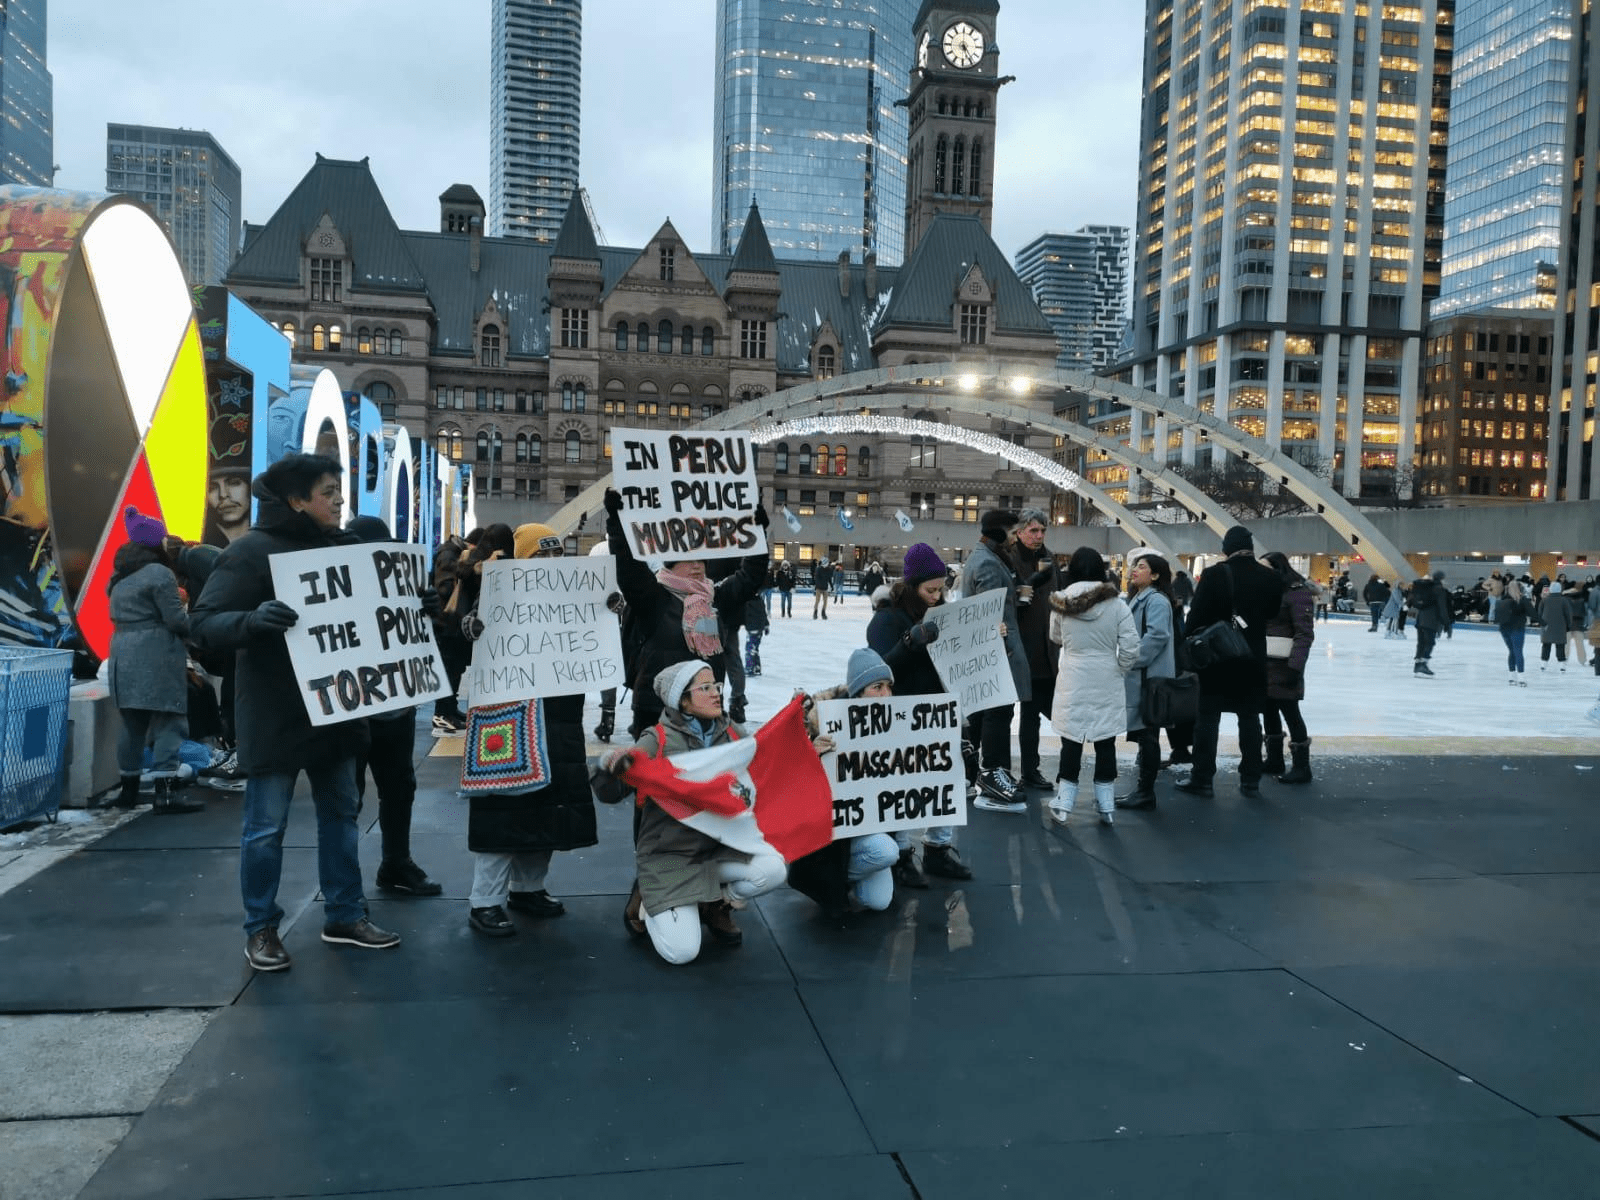 Peruvian diaspora in Toronto stands in solidarity with victims of state repression in Peru